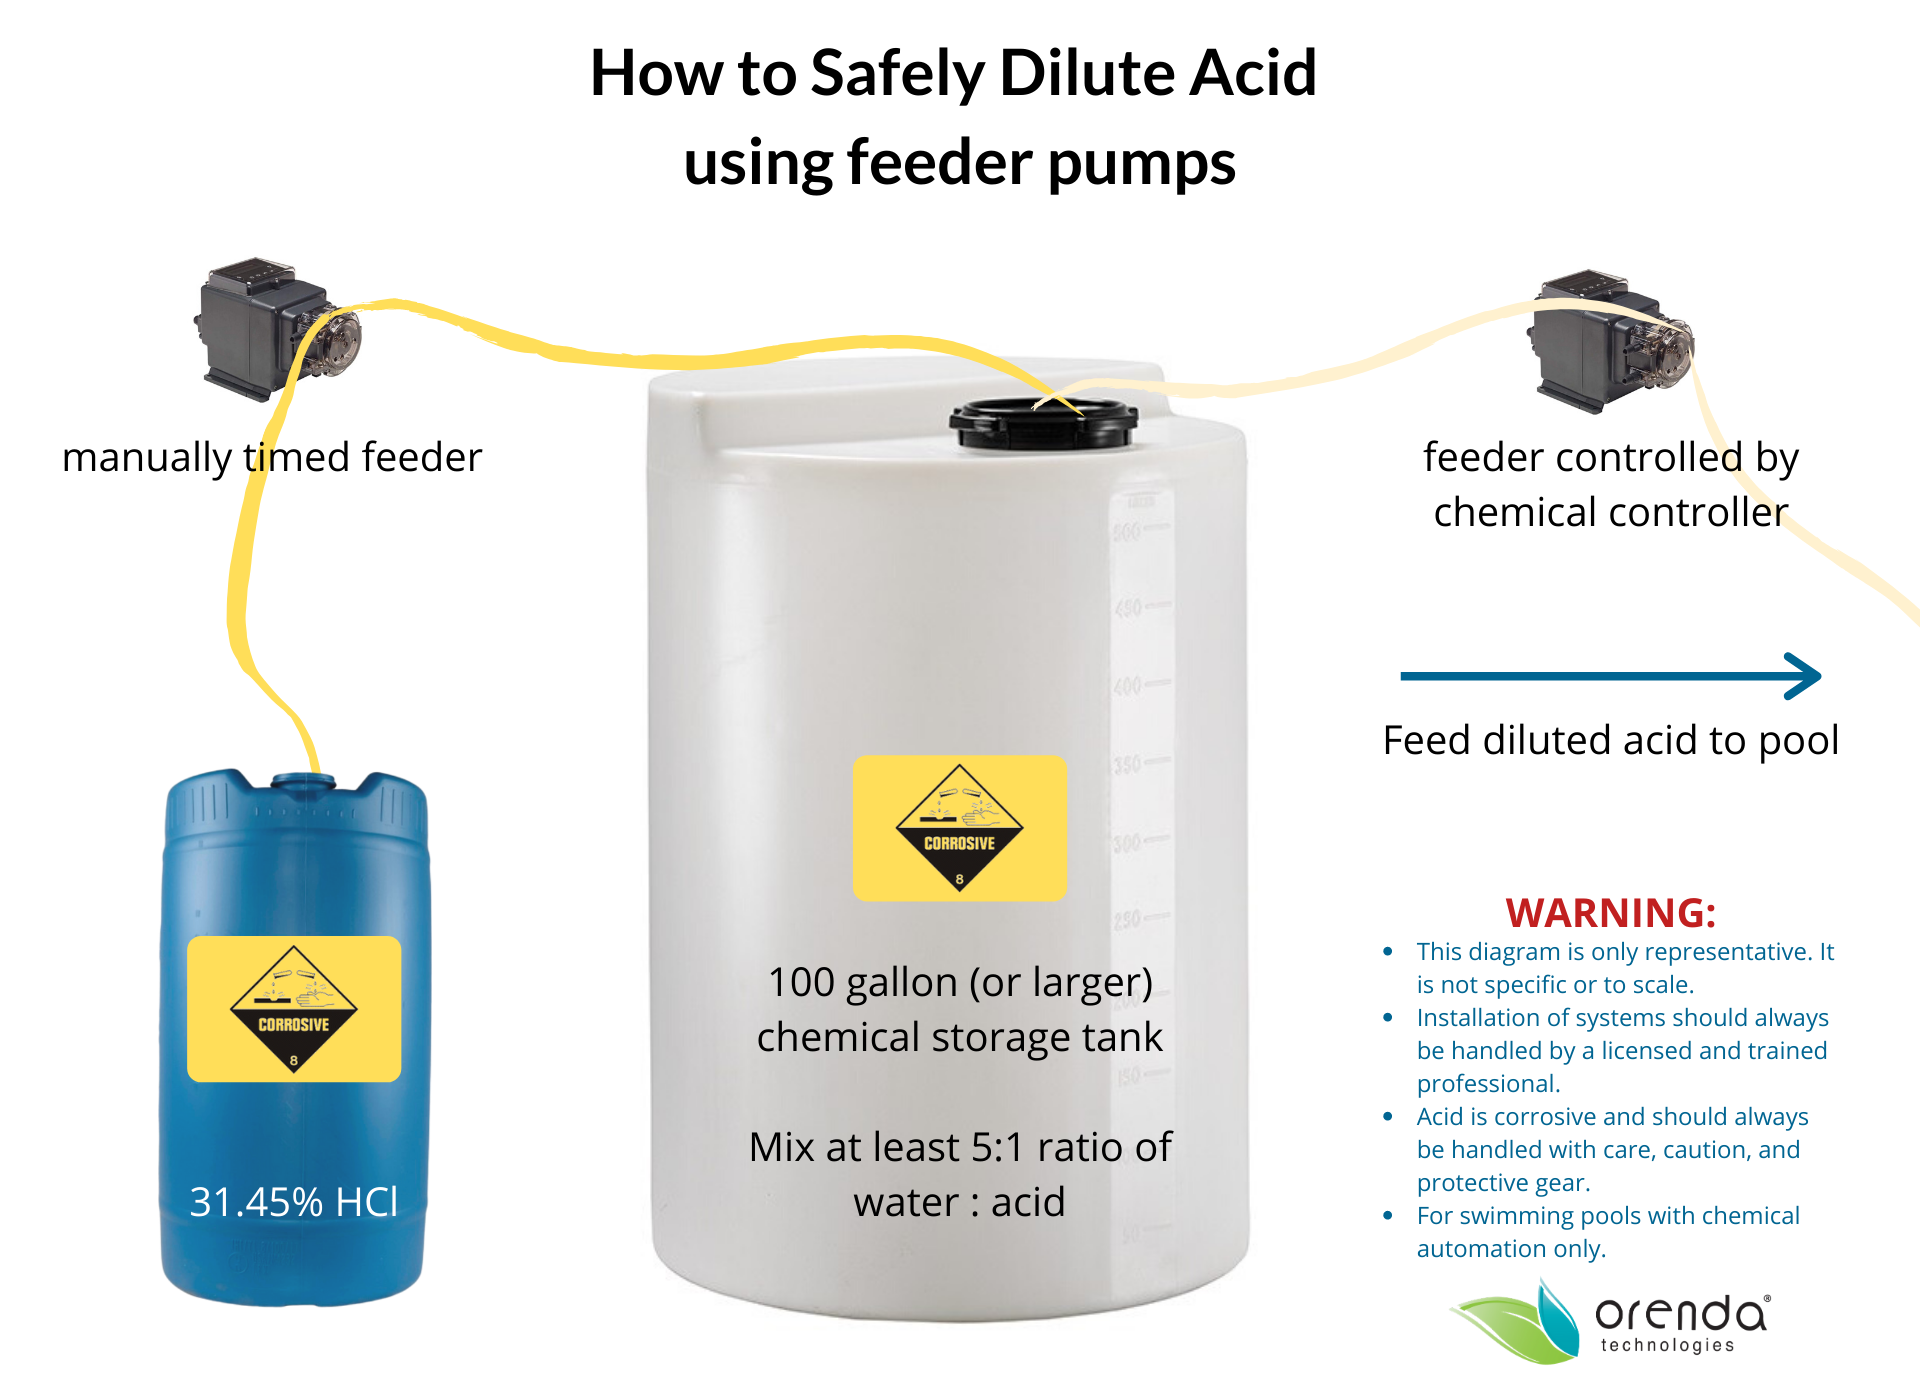 Diluting Muriatic Acid using feeder pumps